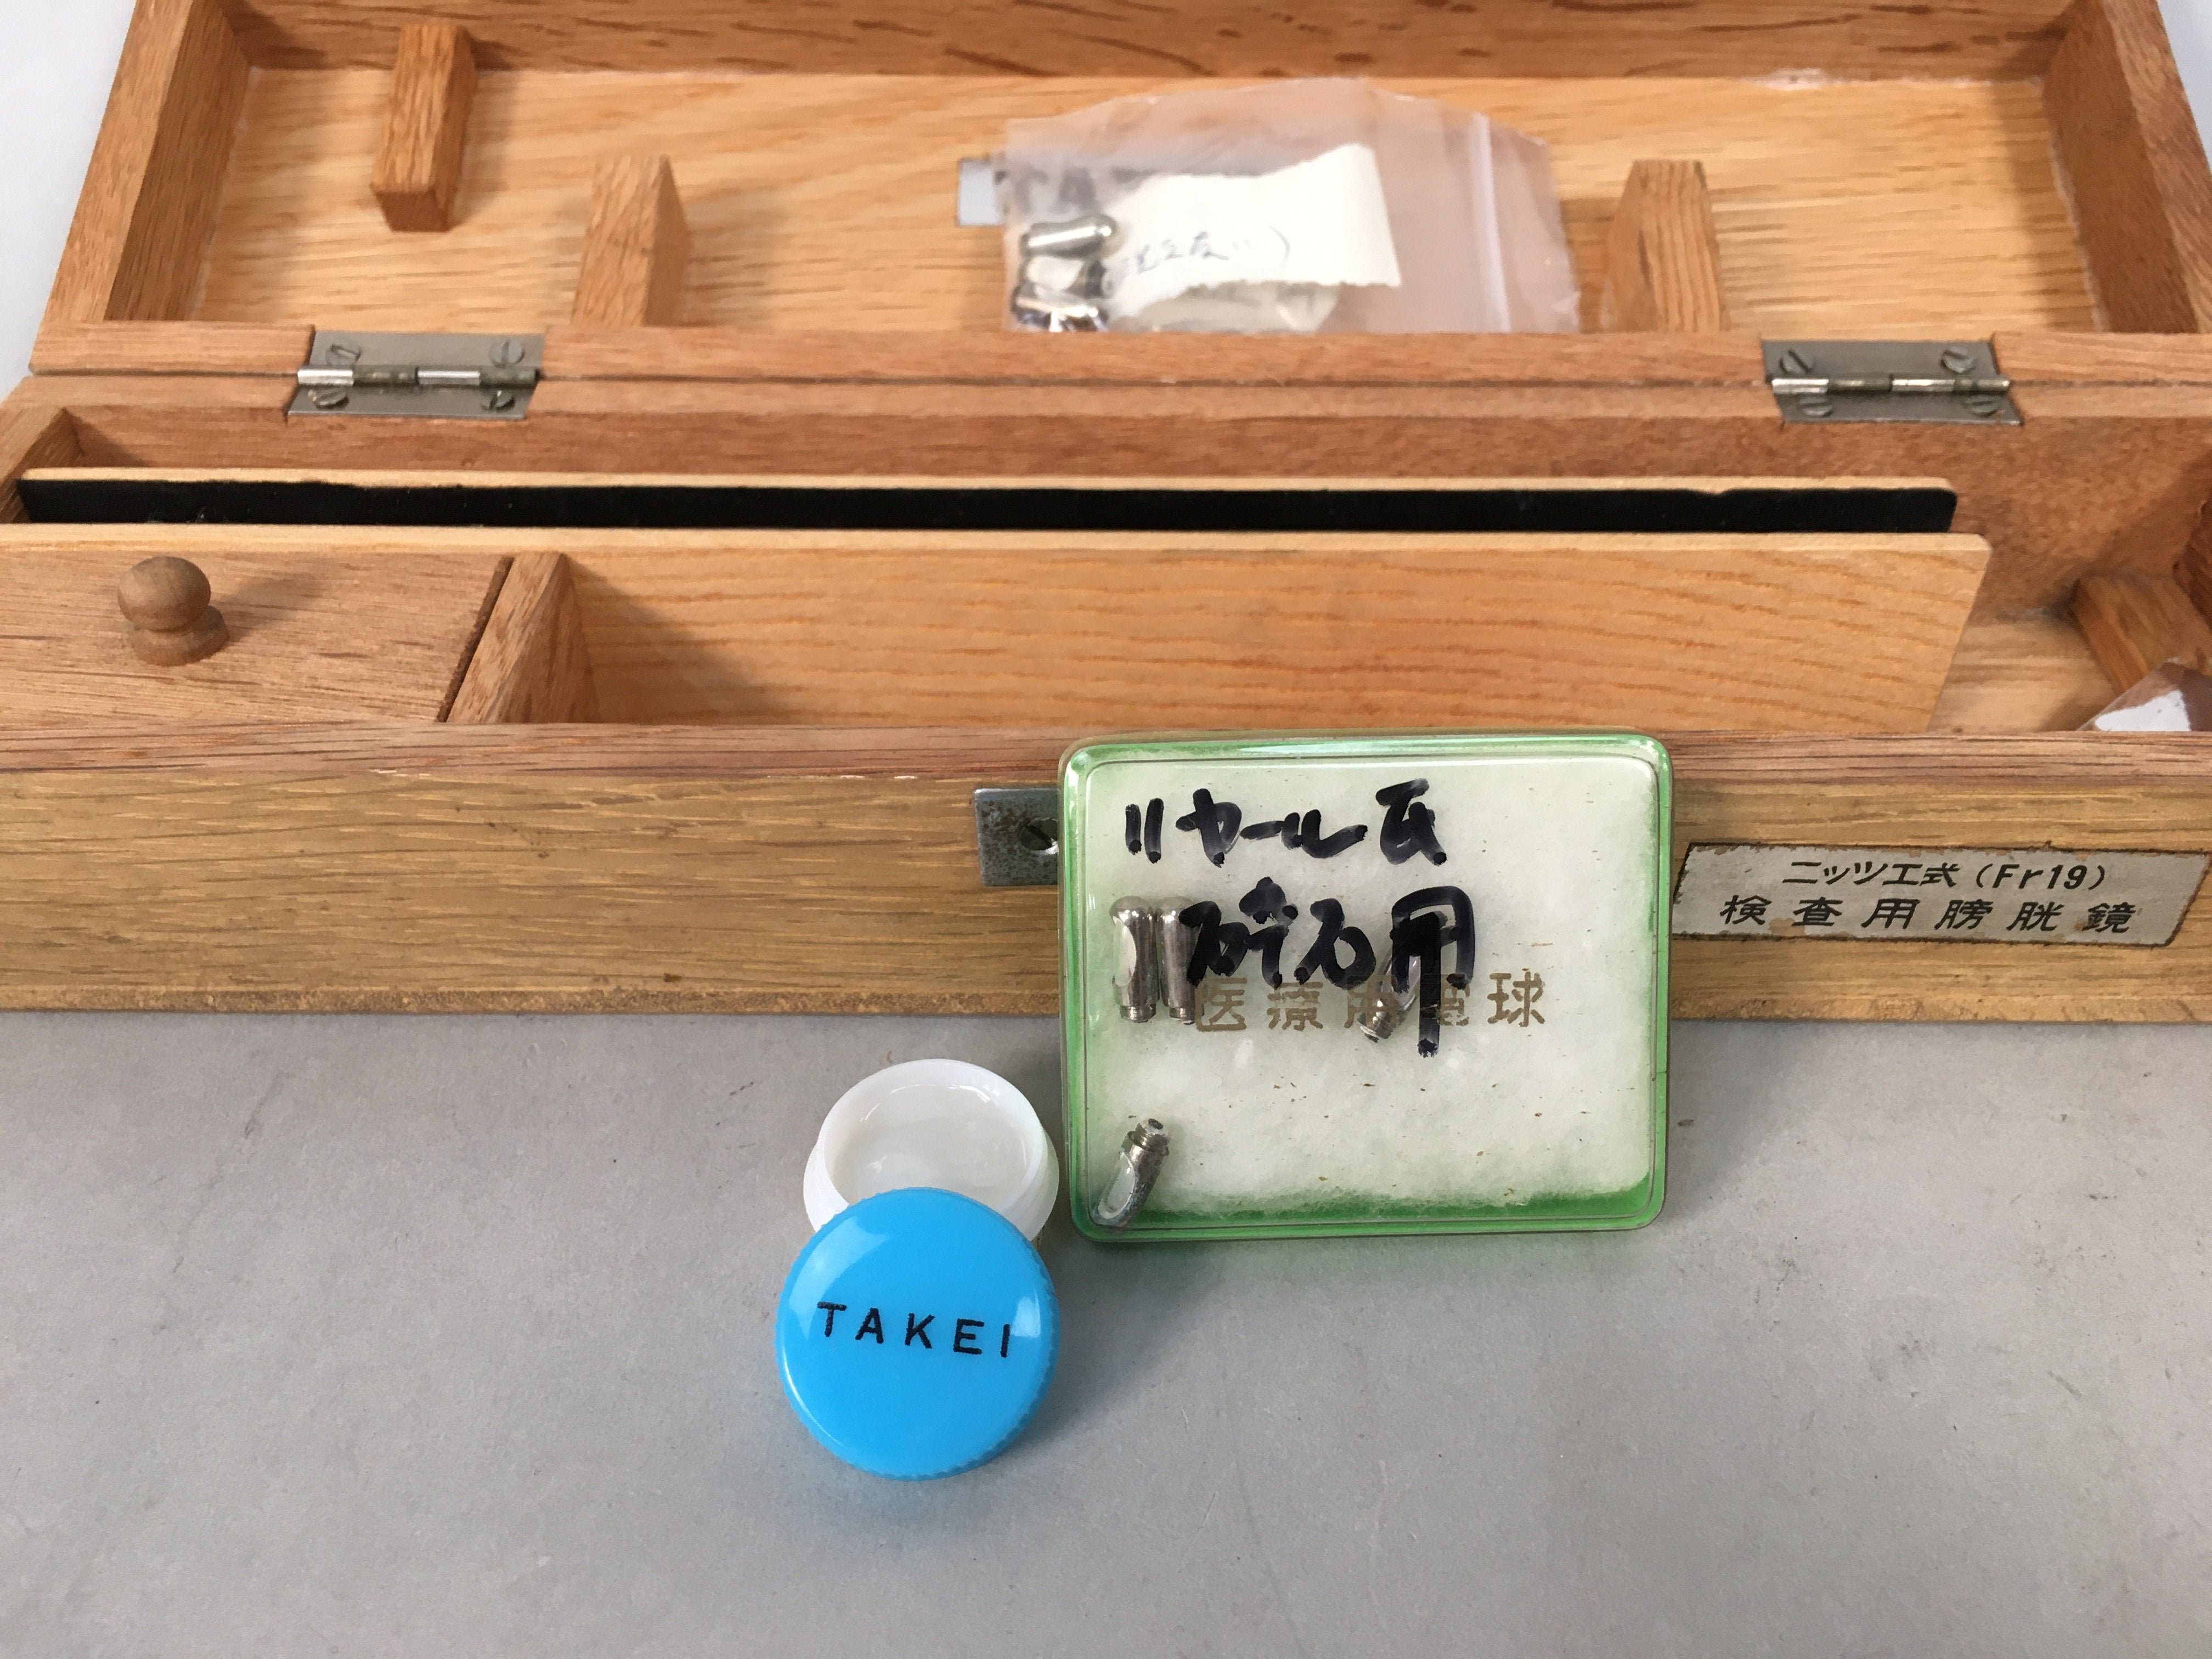 Japanese Medical Instrument Endoscope Bladder Inspection Vtg Boxed PX525